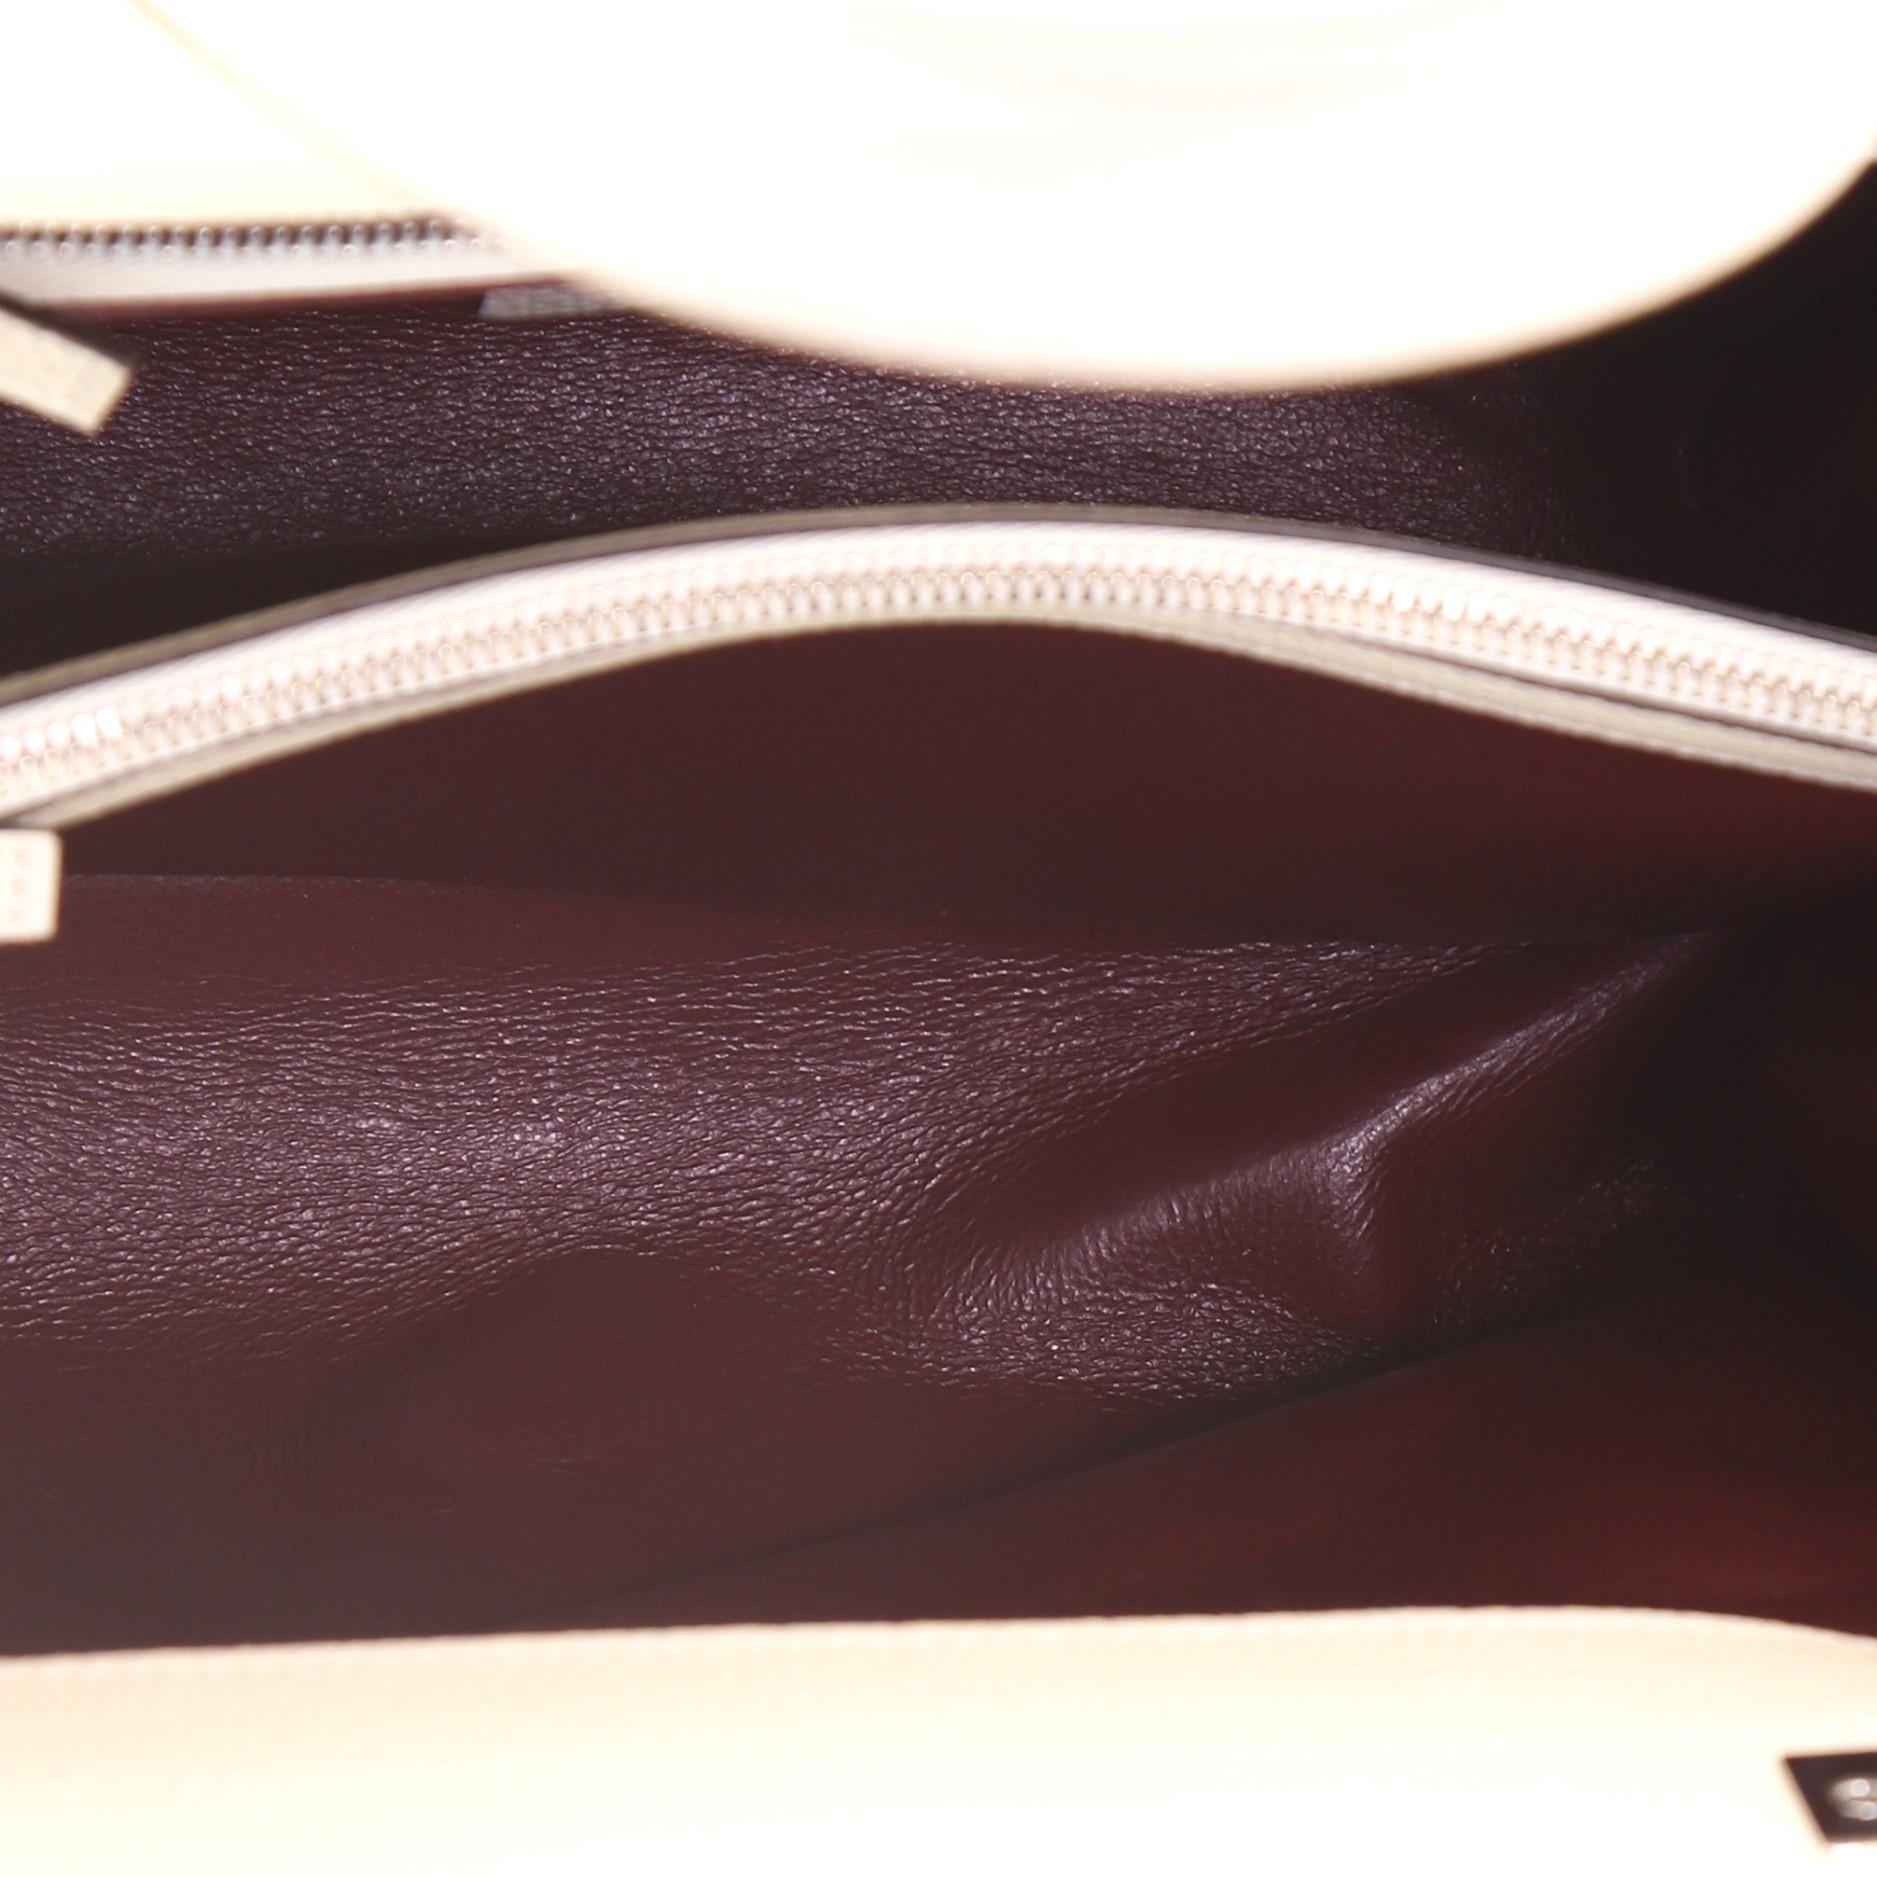 White Gucci Zumi Top Handle Bag Leather Small